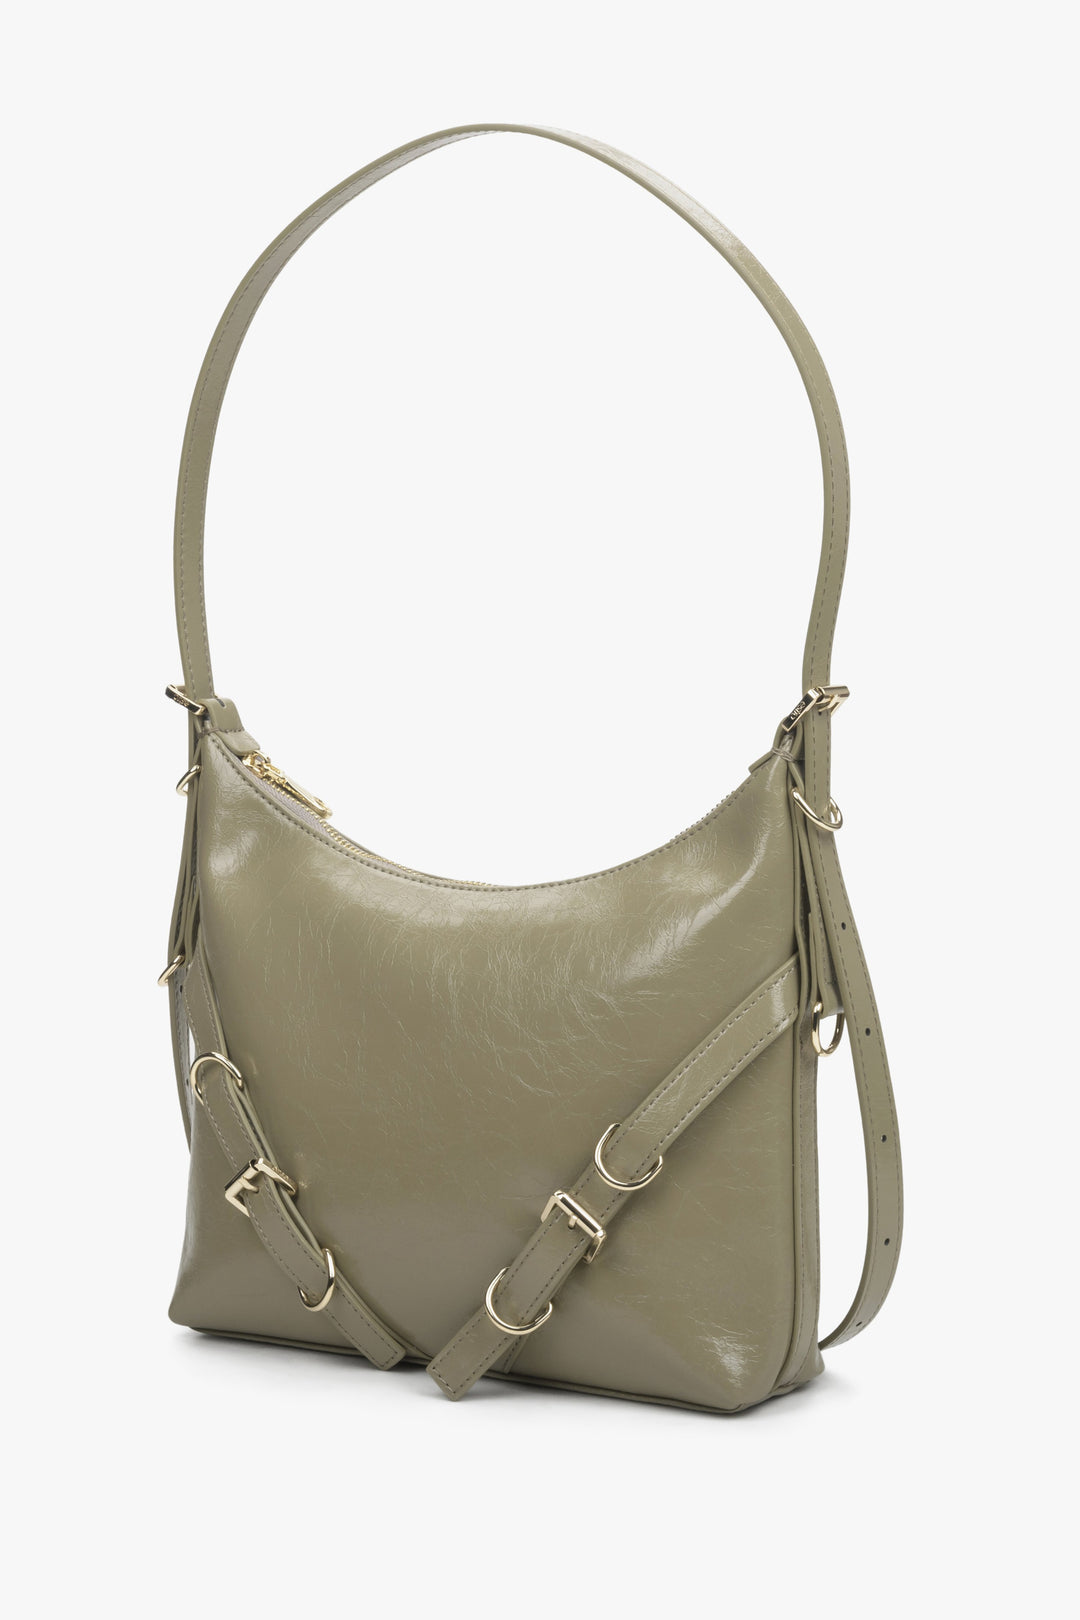 Women's olive Estro leather handbag.